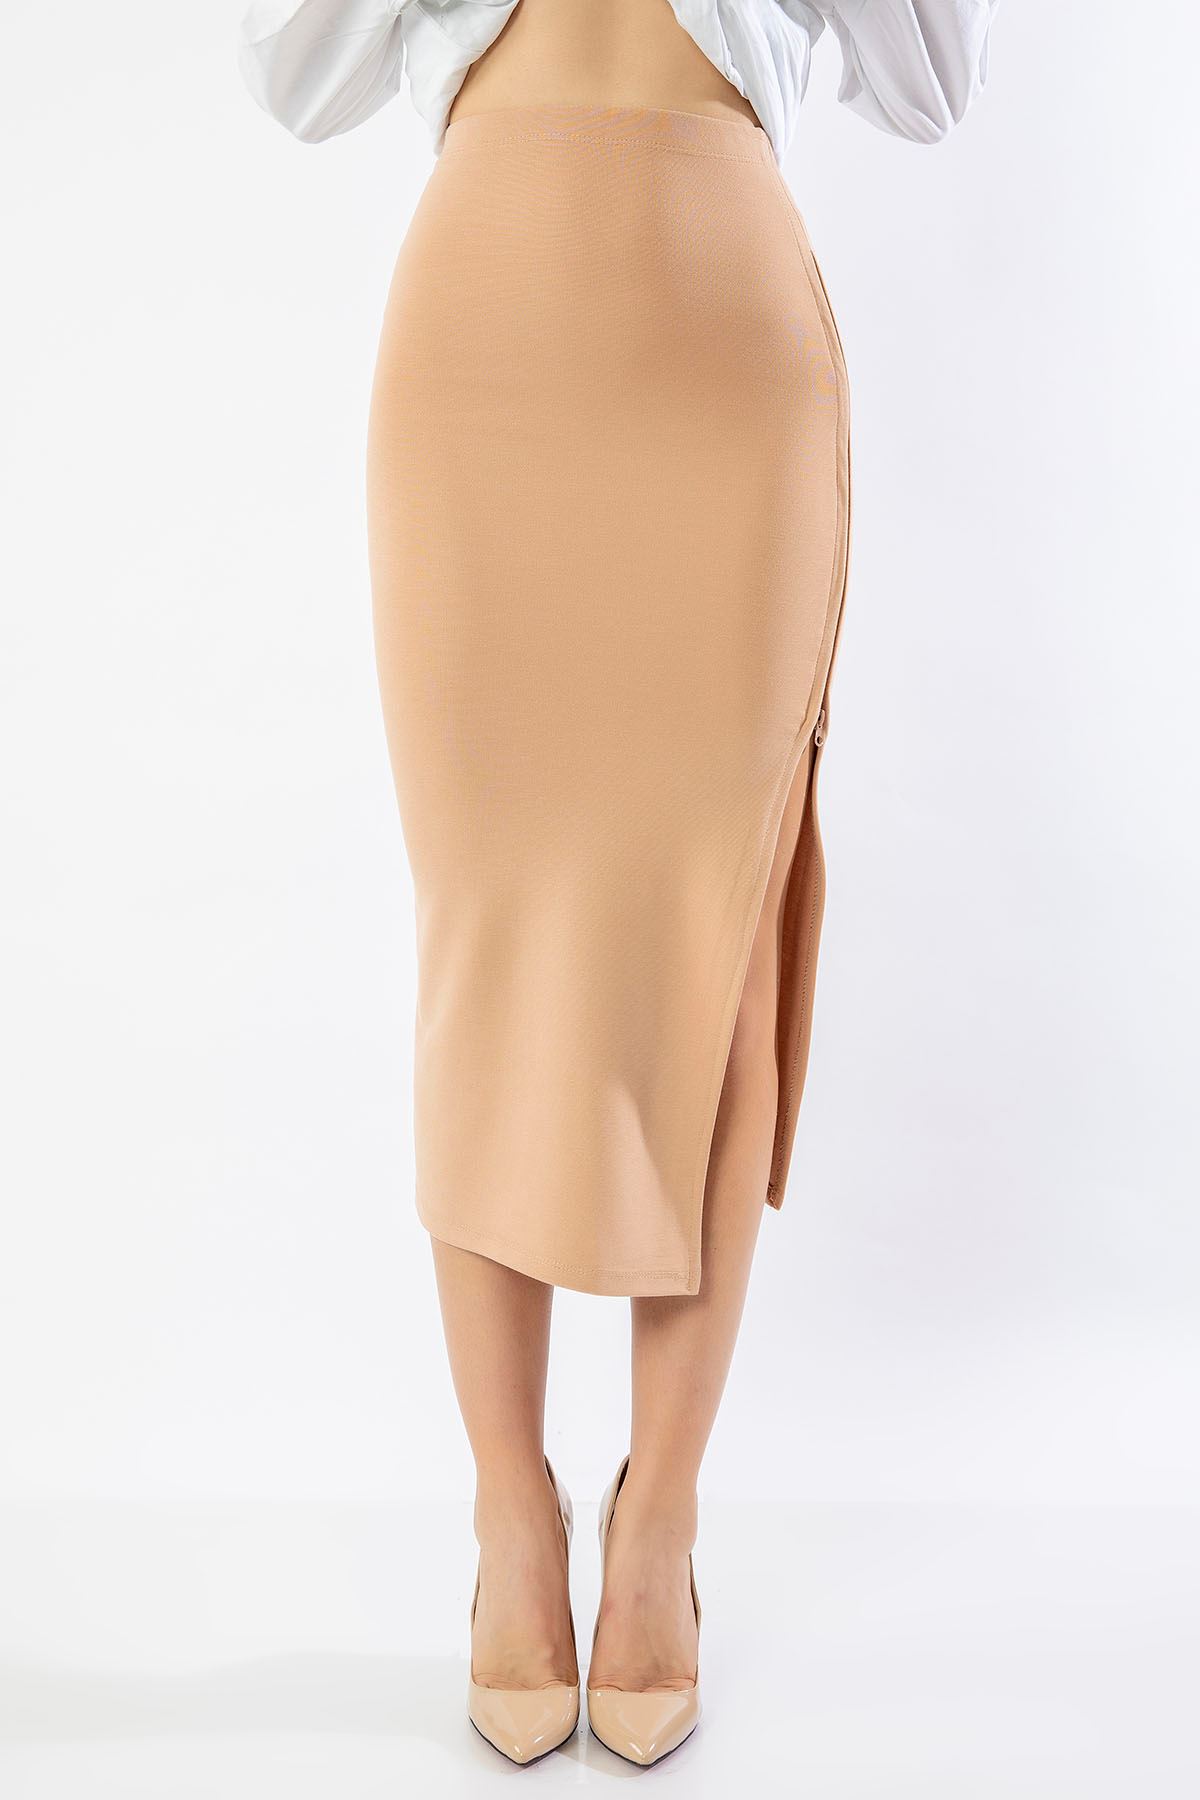 Knit Fabric 3/4 Short Tight Fit Slit Skirt - Beige 